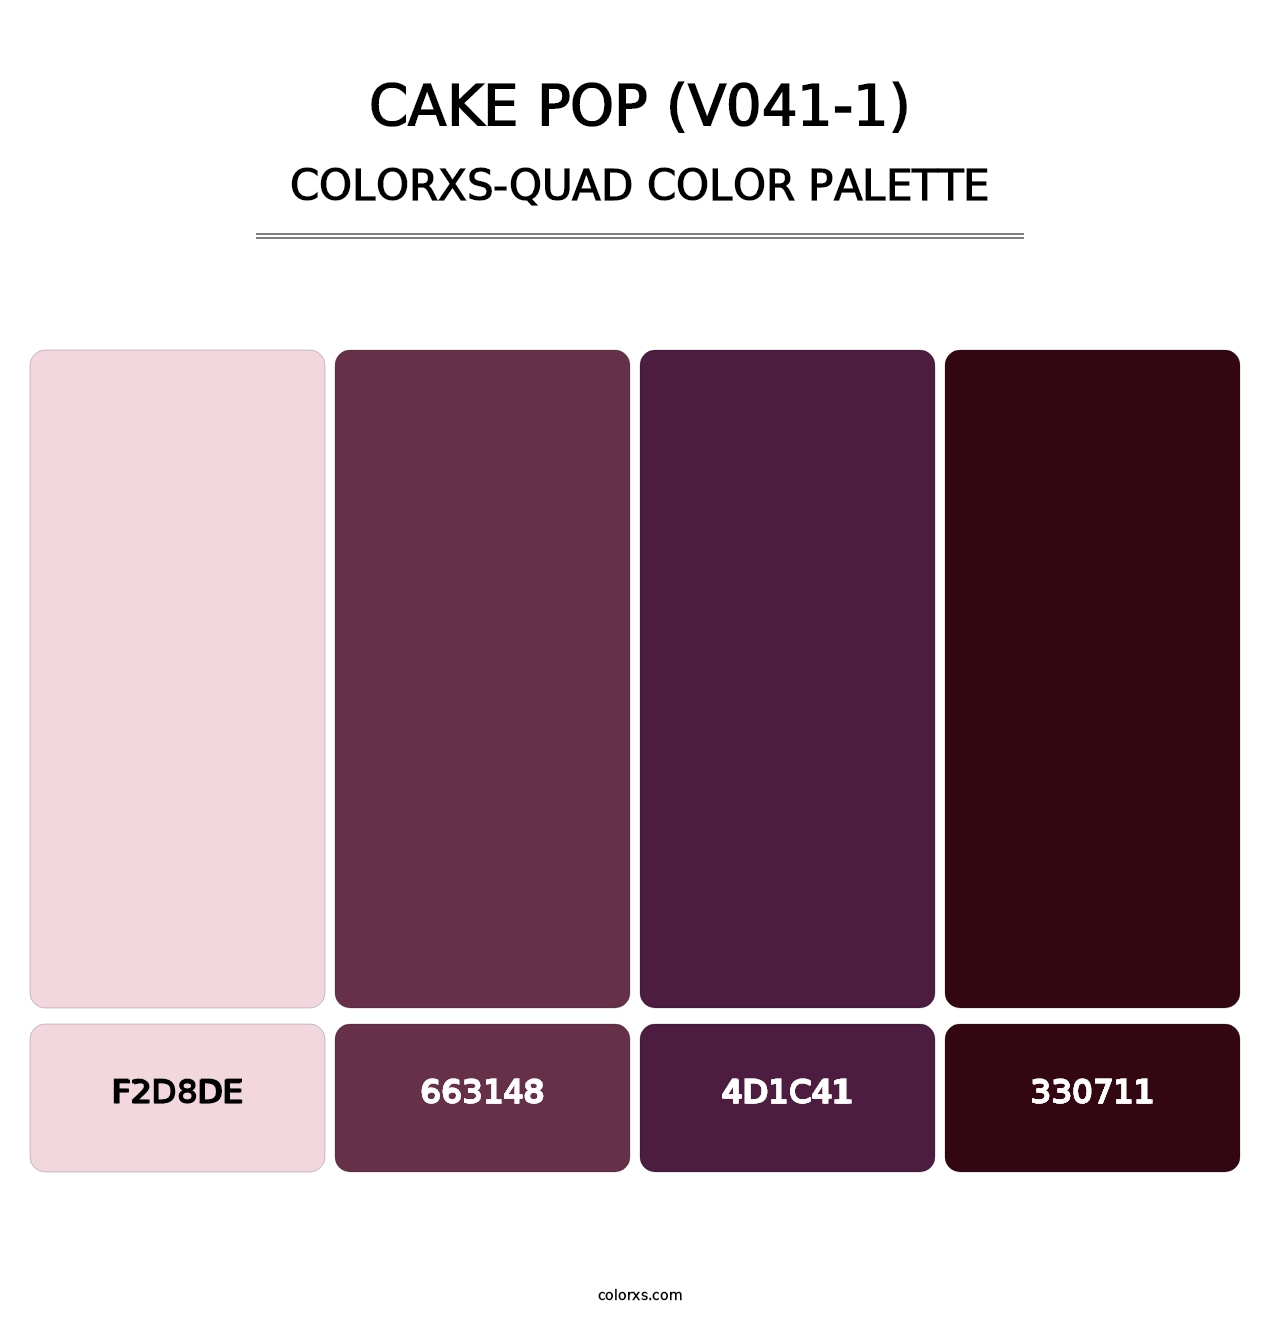 Cake Pop (V041-1) - Colorxs Quad Palette